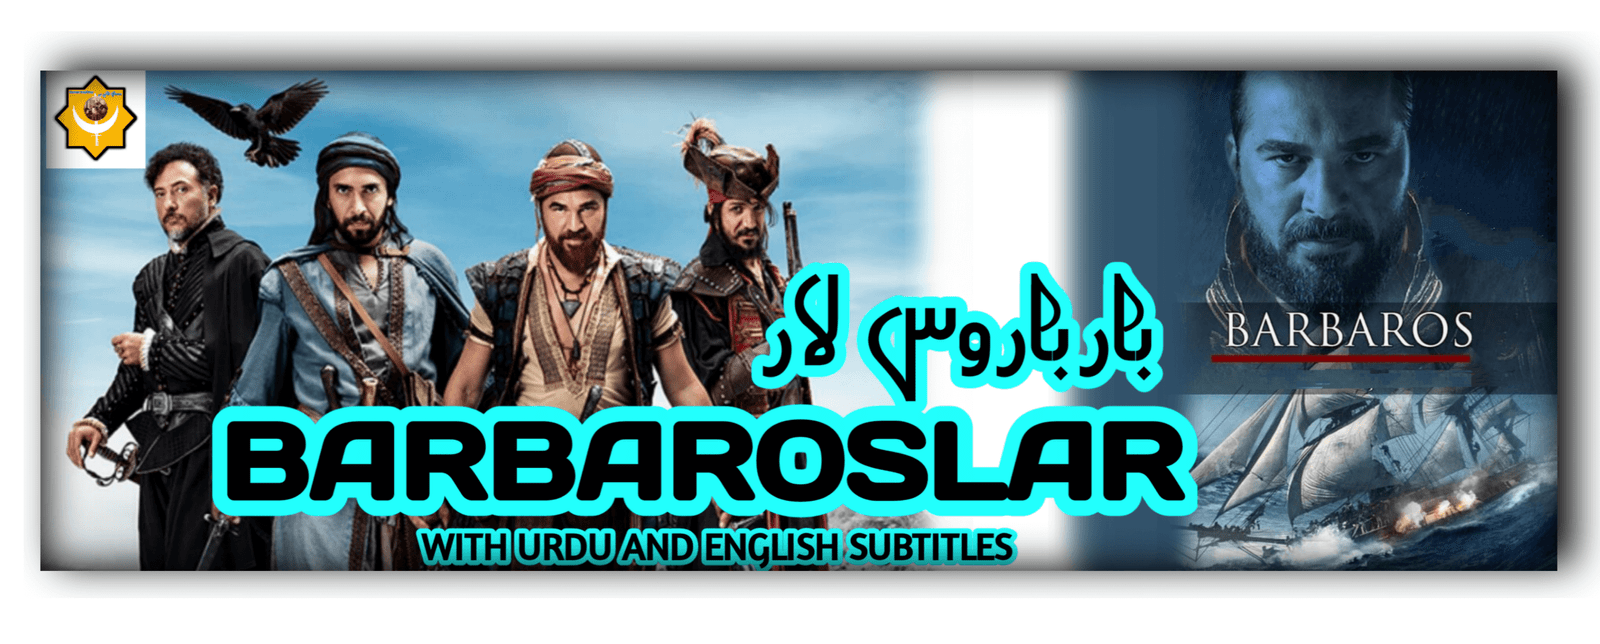 Barbaroslar With Urdu And English Subtitles